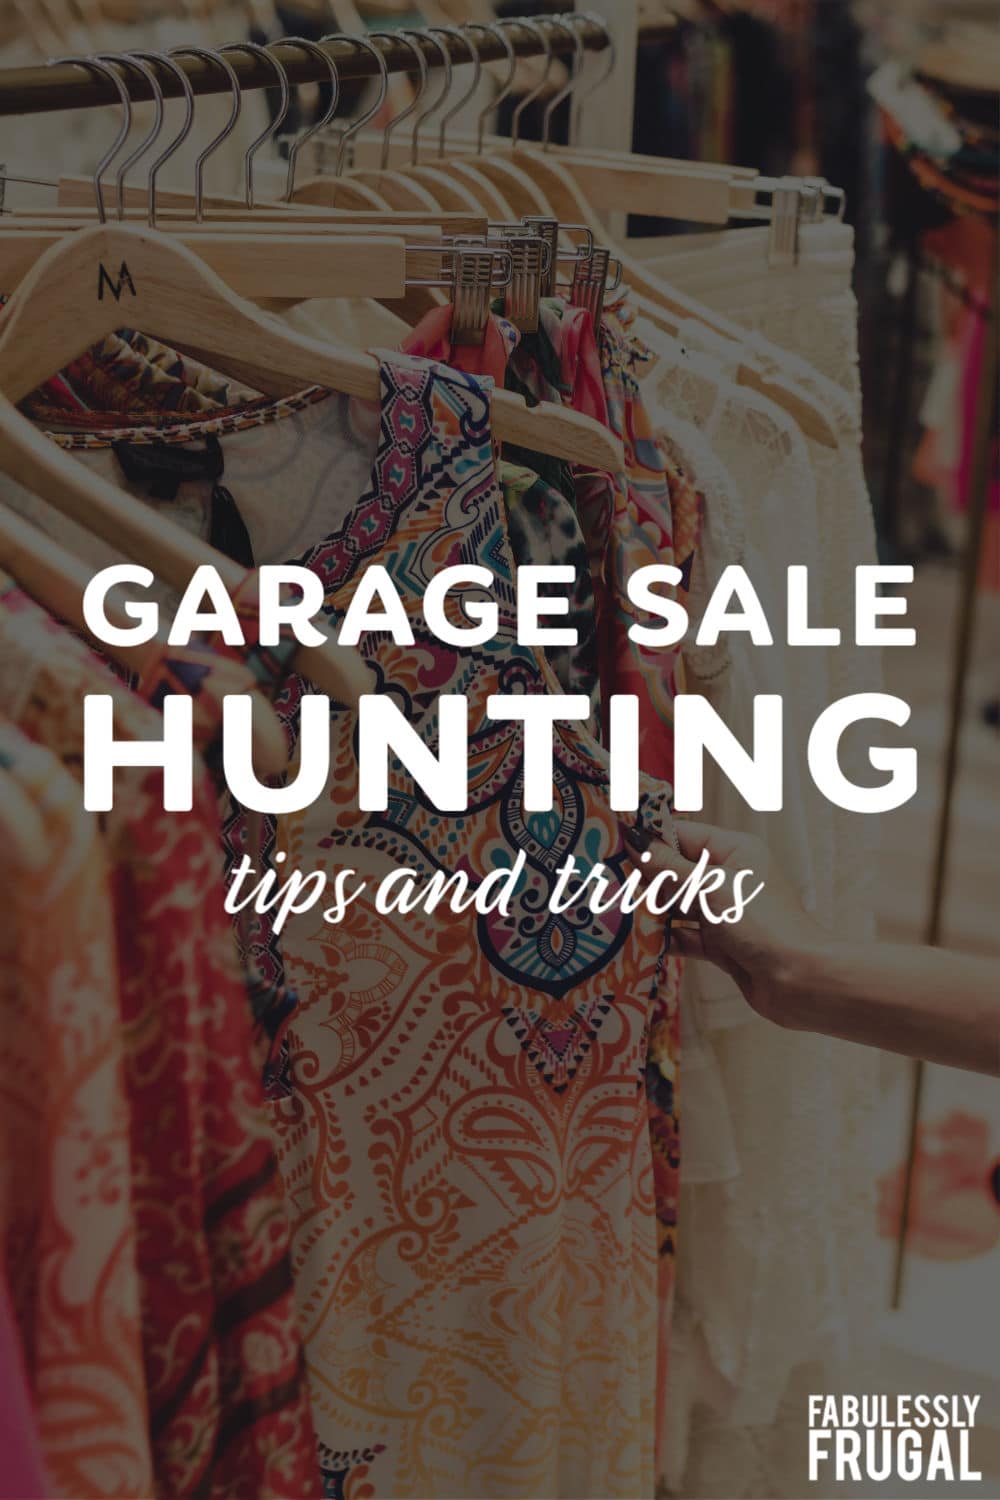 Garage sale hunting tips